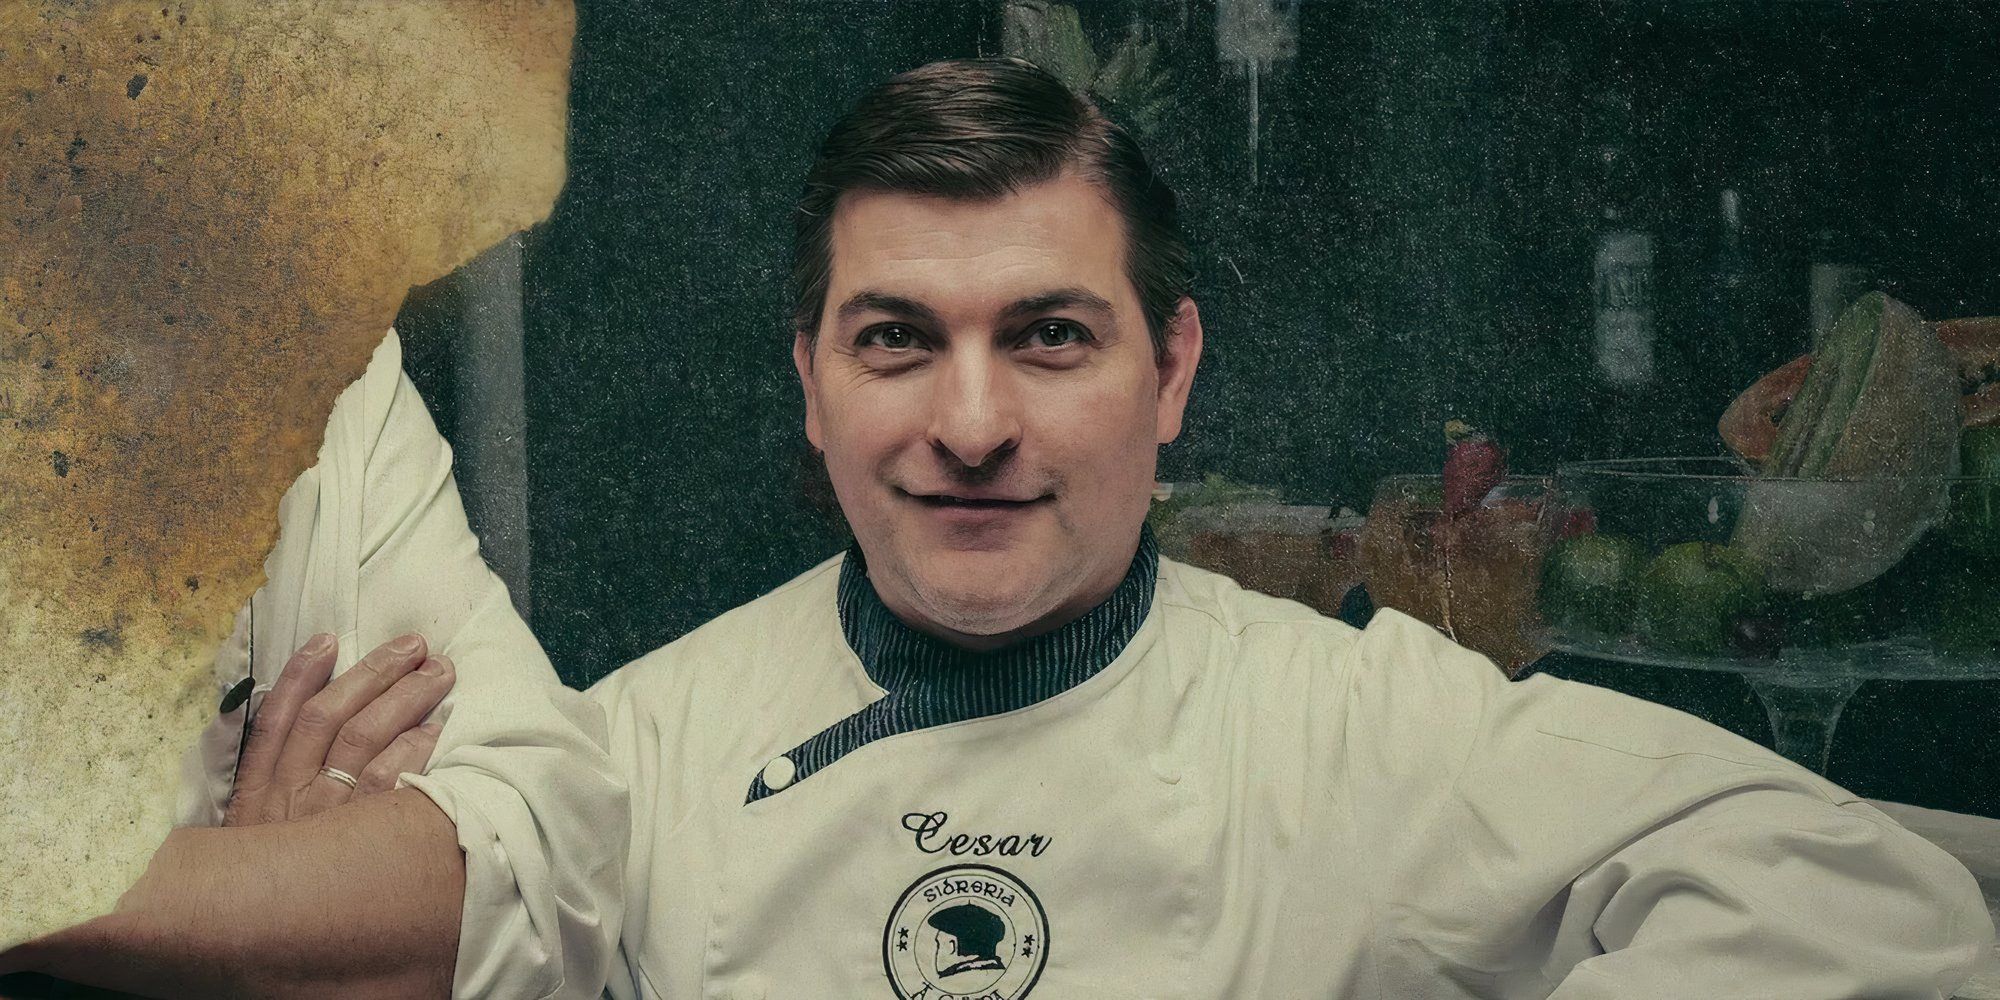 César Román in Netflix docuseries 'Cooking Up Murder'